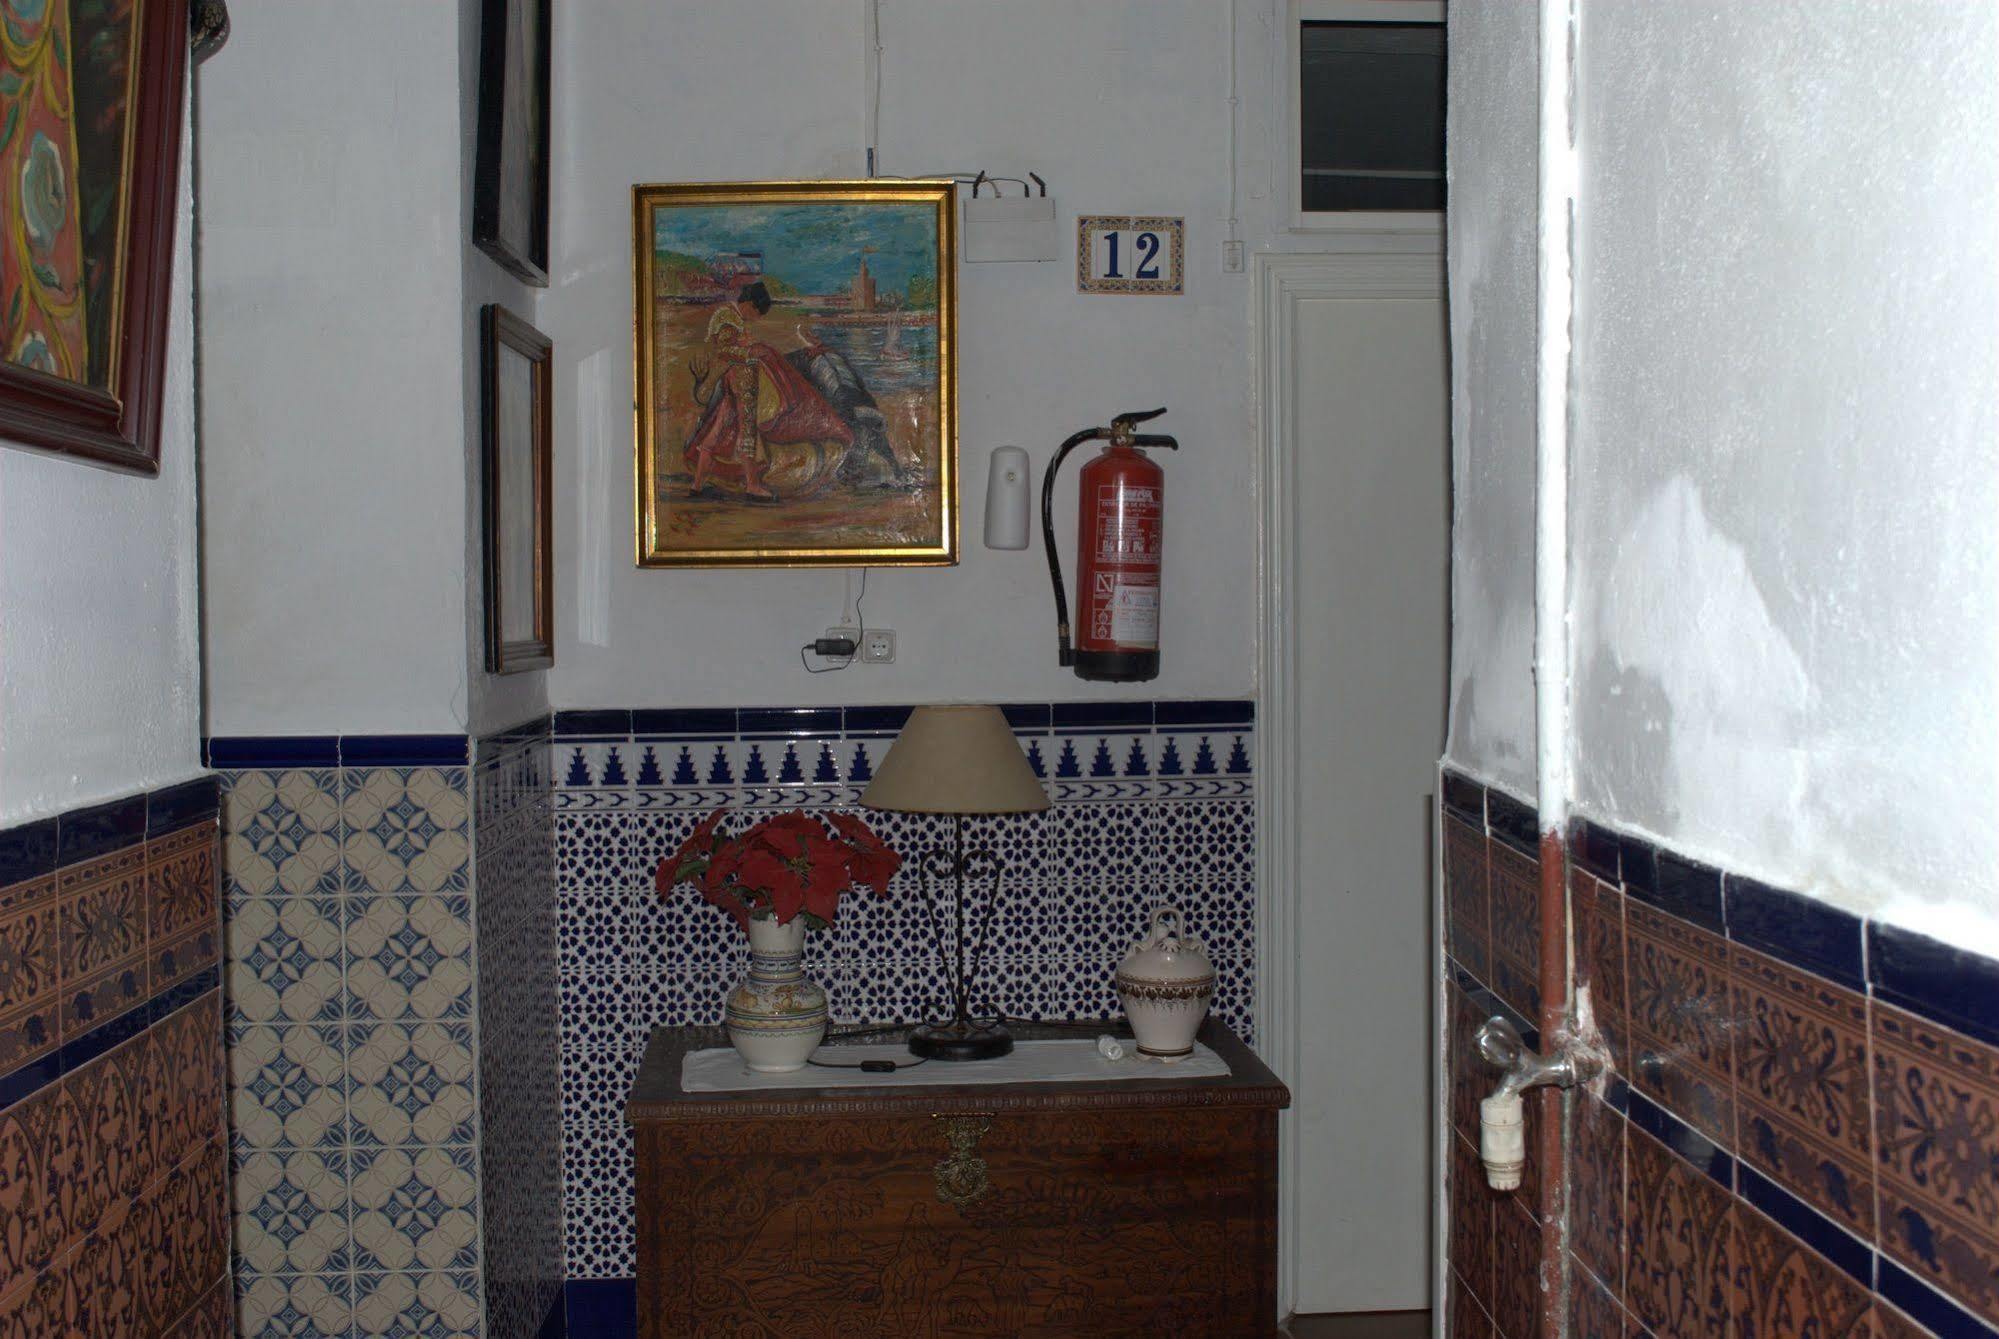 Pension Santa Maria La Blanca Seville Exterior photo